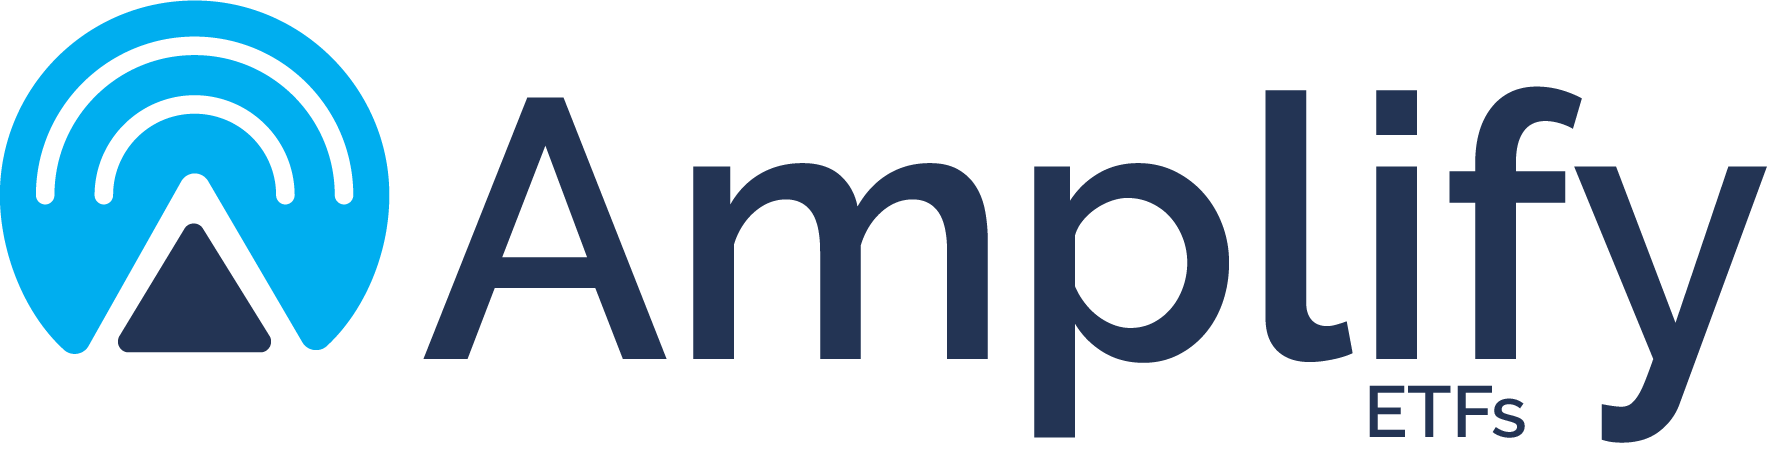 Amplify Logo Main@3x (1).png